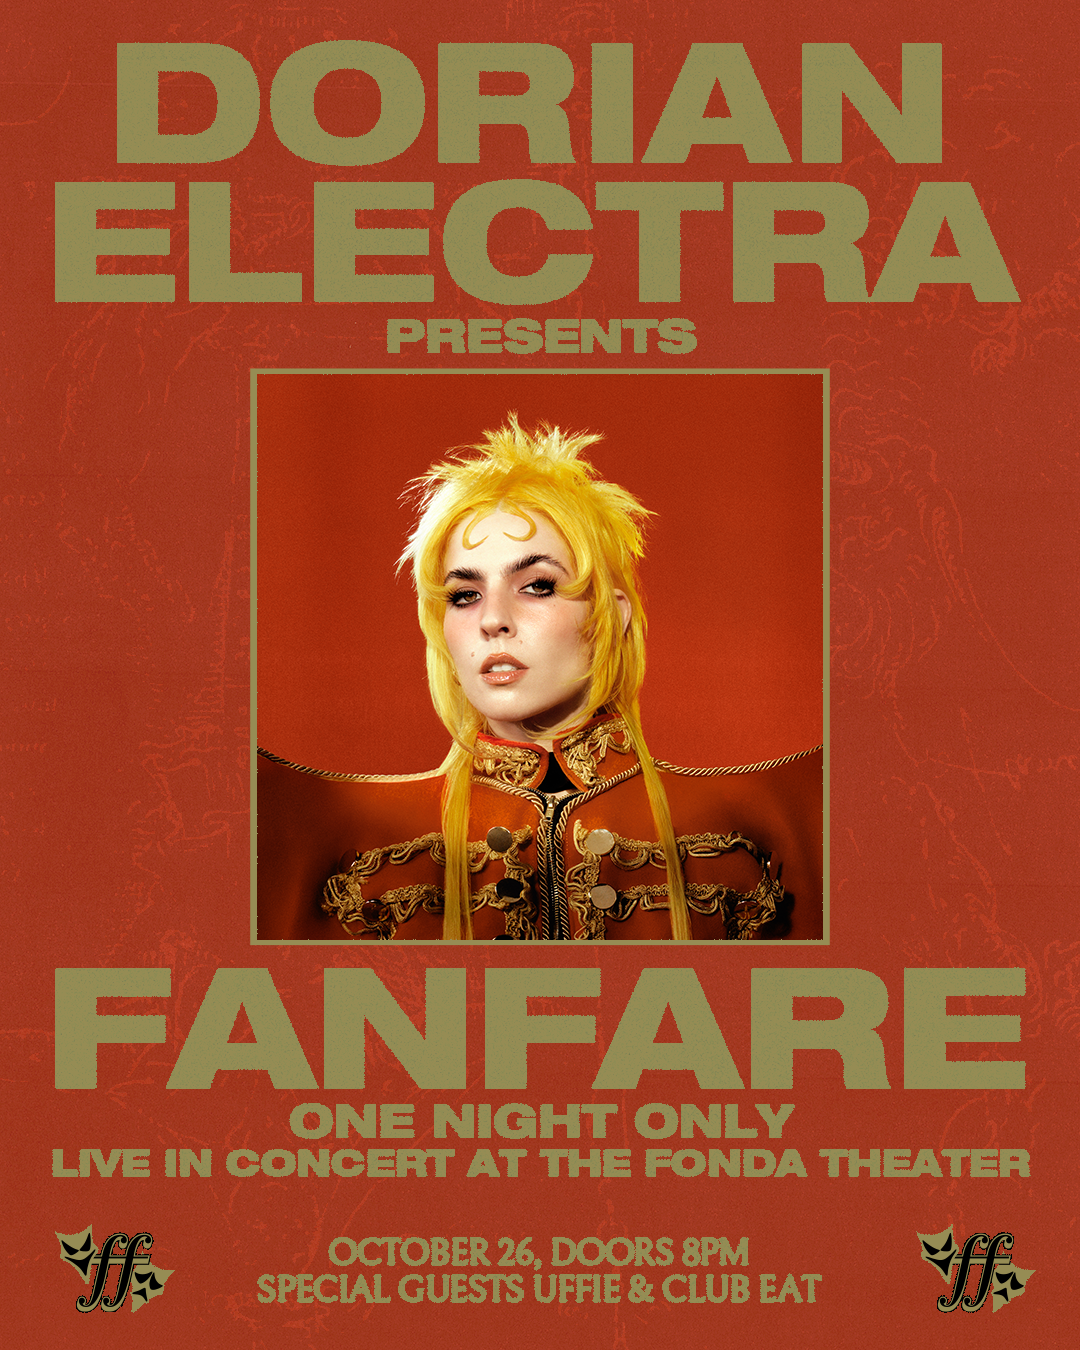 Dorian Electra announces their third studio album Fanfare